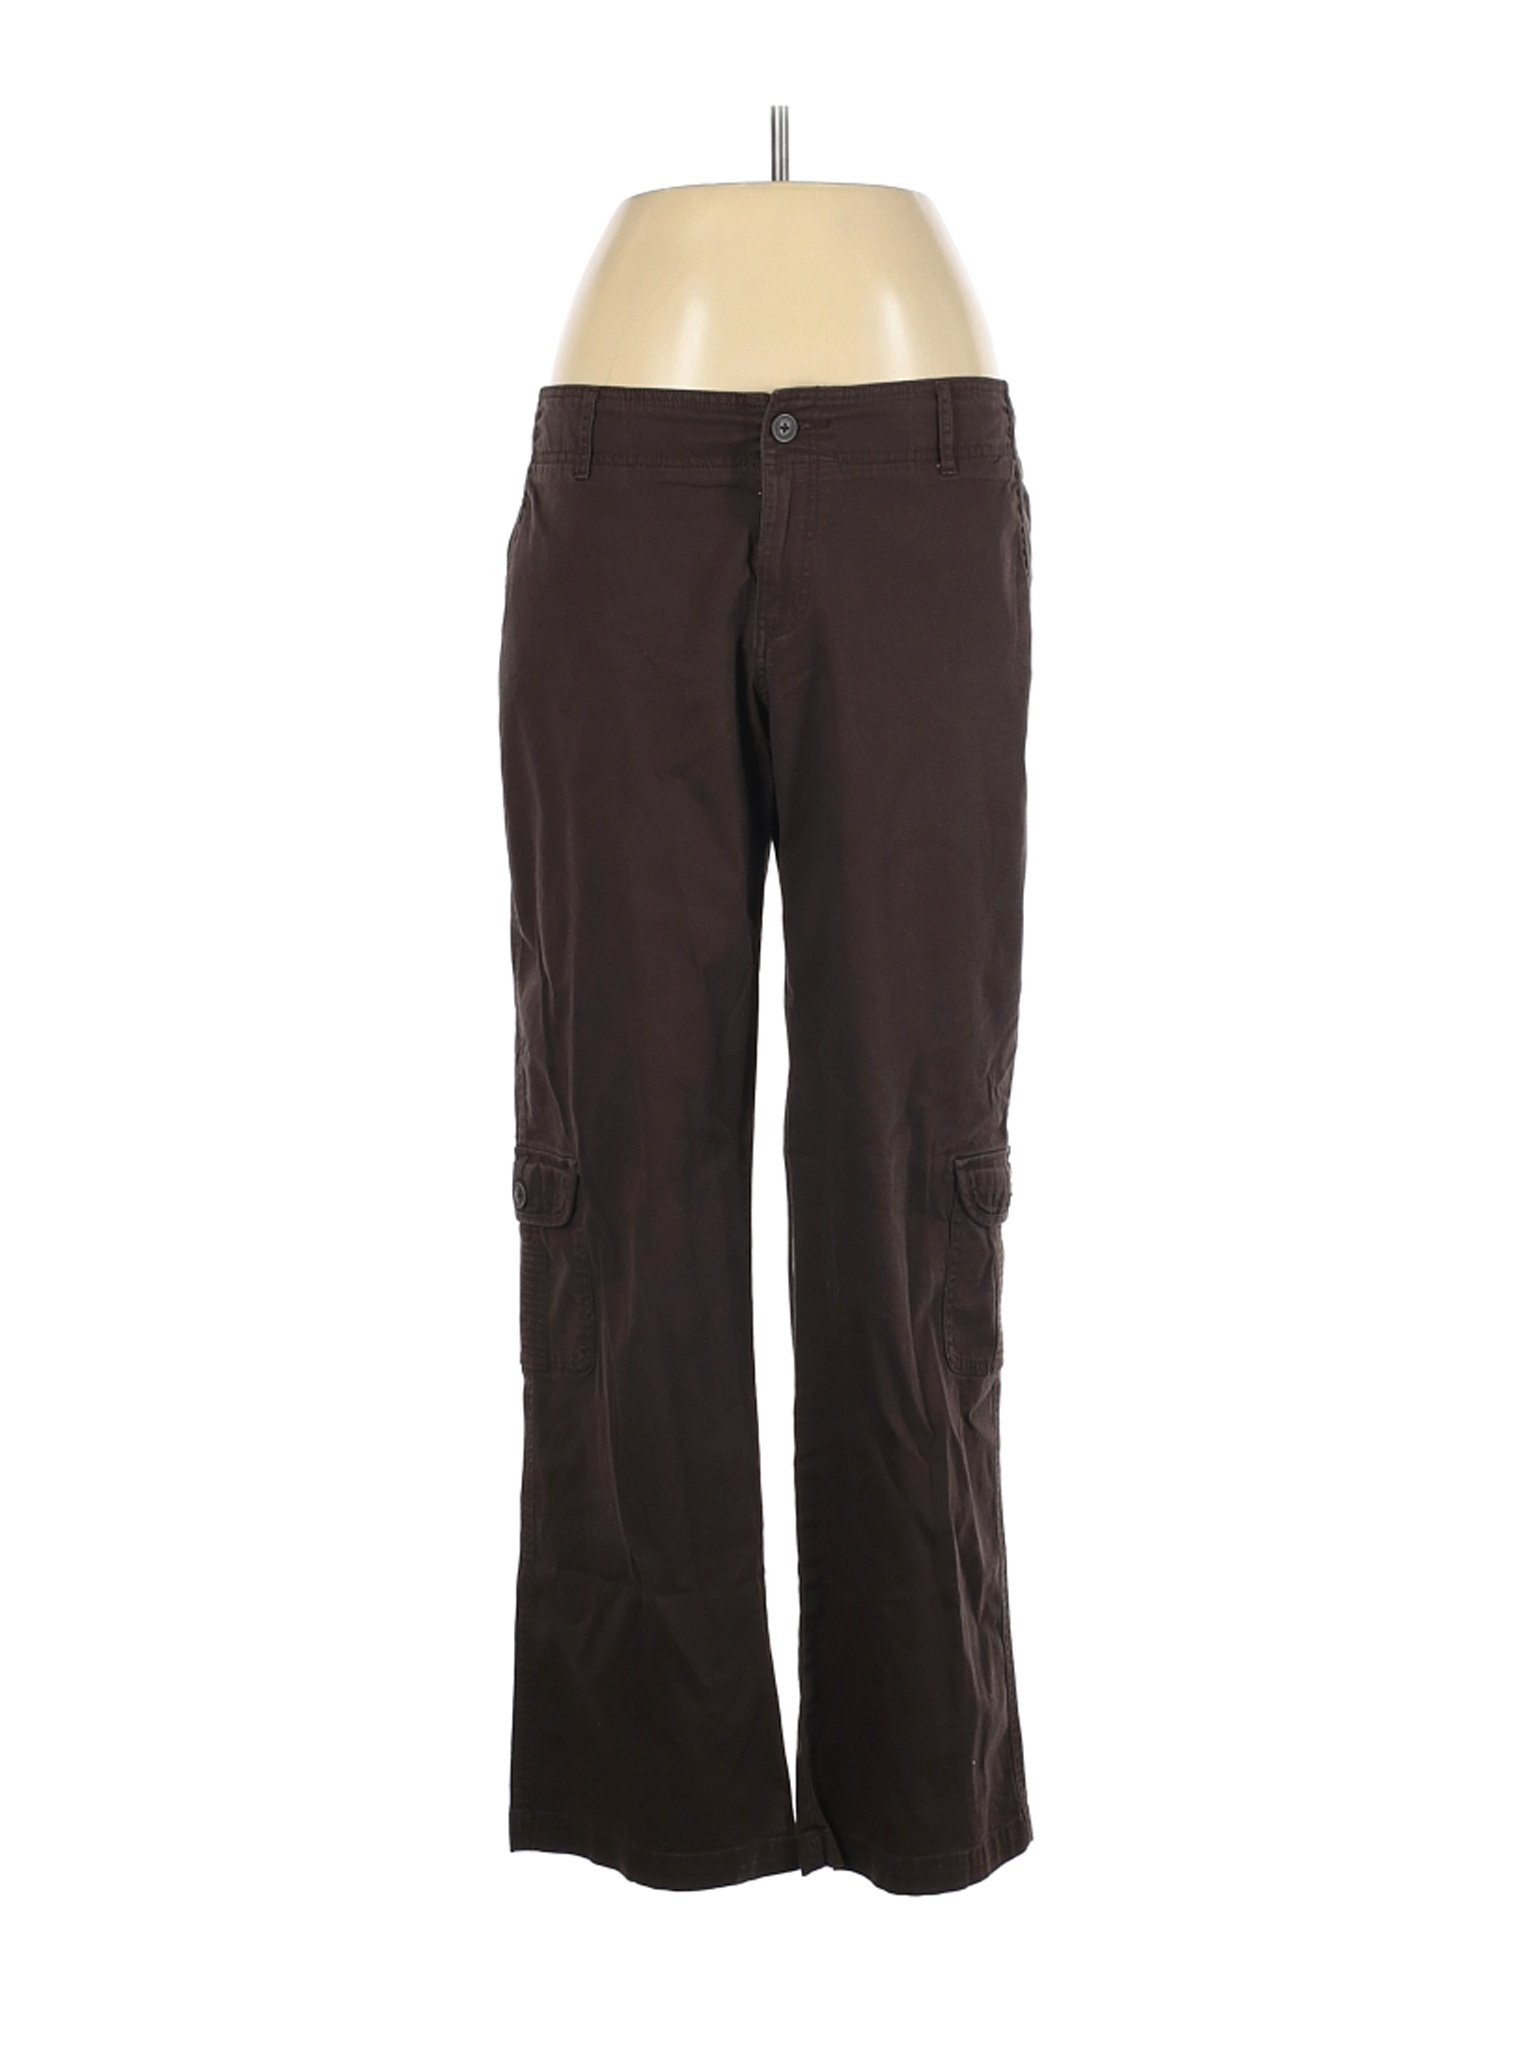 SONOMA life + style Women Brown Cargo Pants 12 | eBay